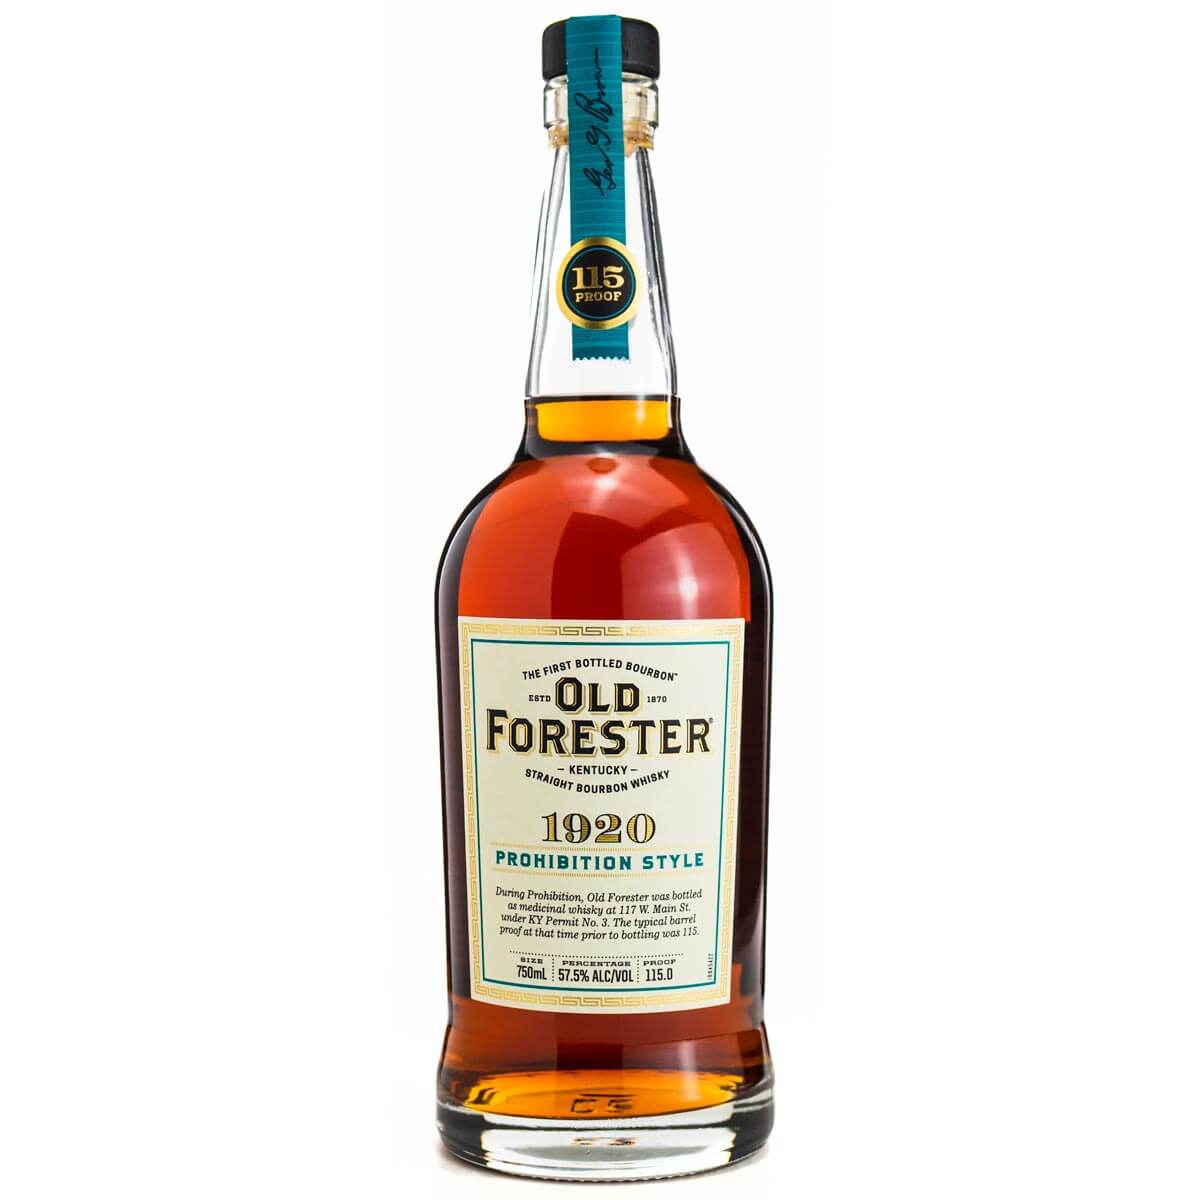 Old Forester 1920 bourbon bottle